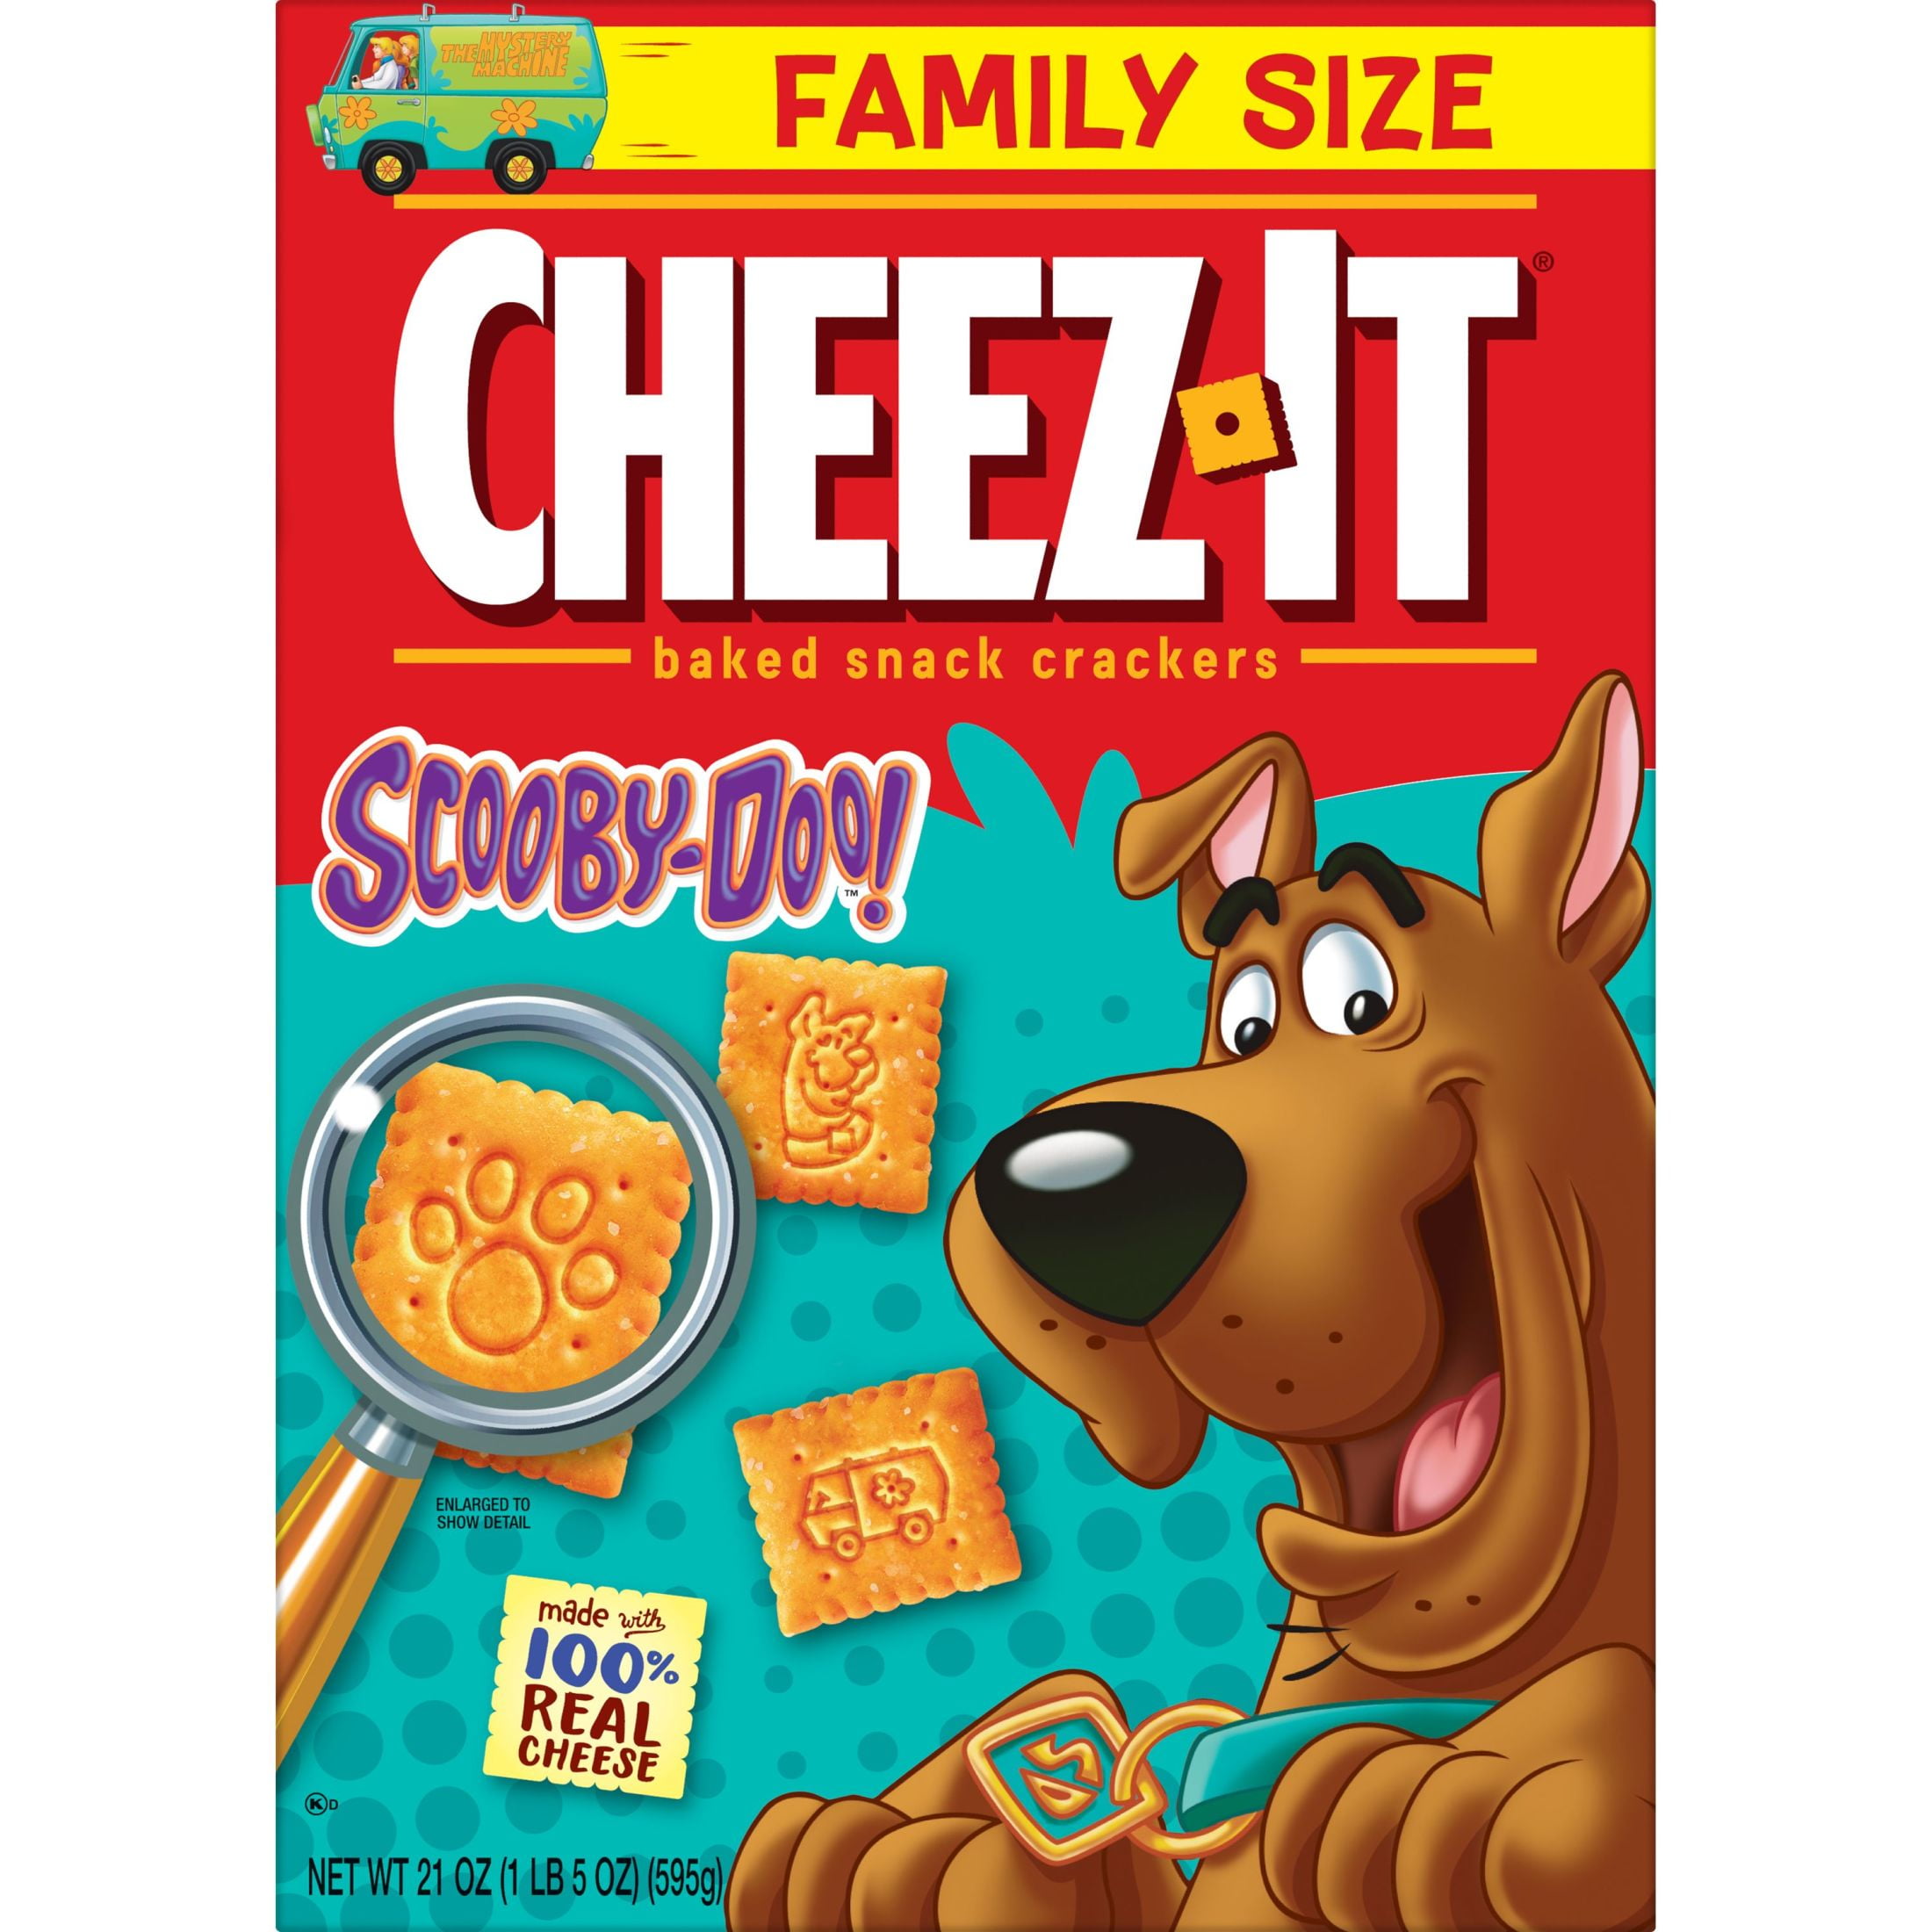 Cheez-It SCOOBY-DOO! Original Cheese Crackers, 21 oz